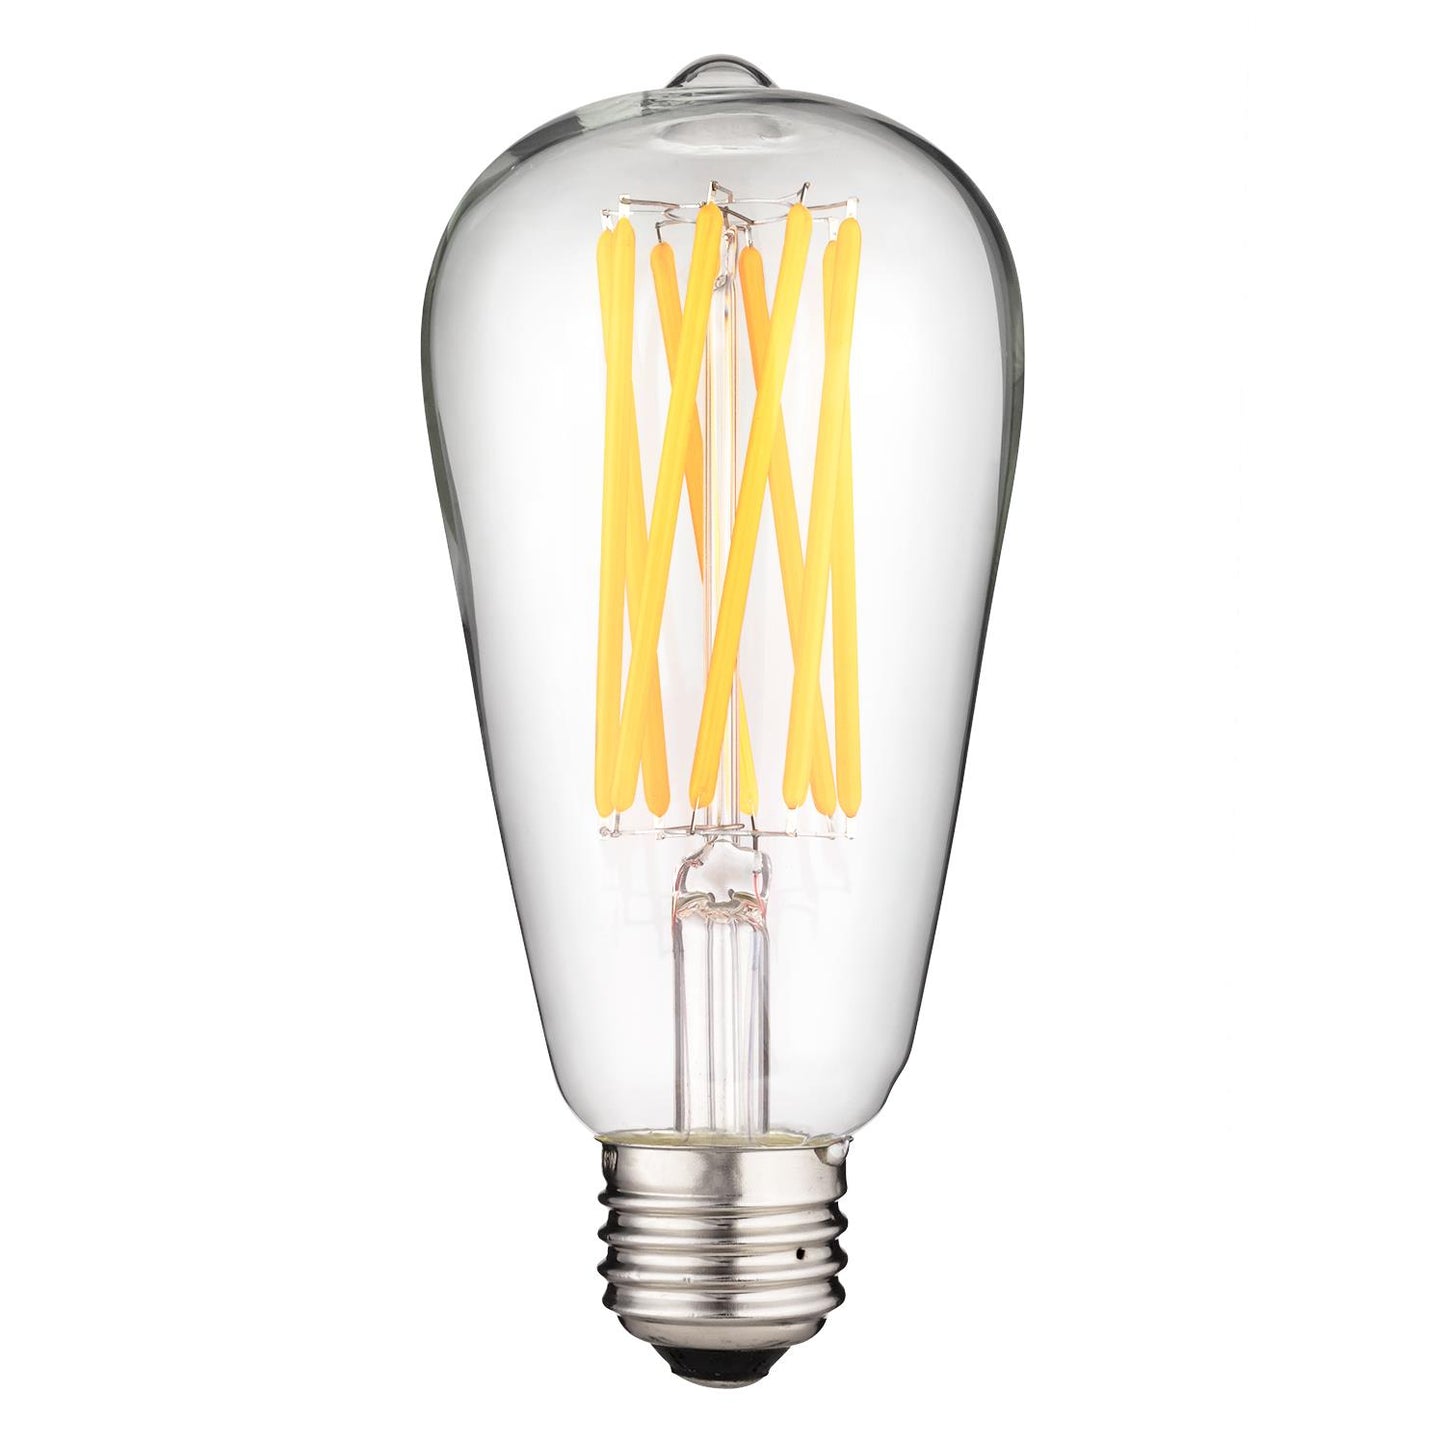 Sunlite 80891 LED Filament S19 Standard 8-Watt (60 Watt Equivalent) Clear Dimmable Light Bulb, 2700K - Warm White